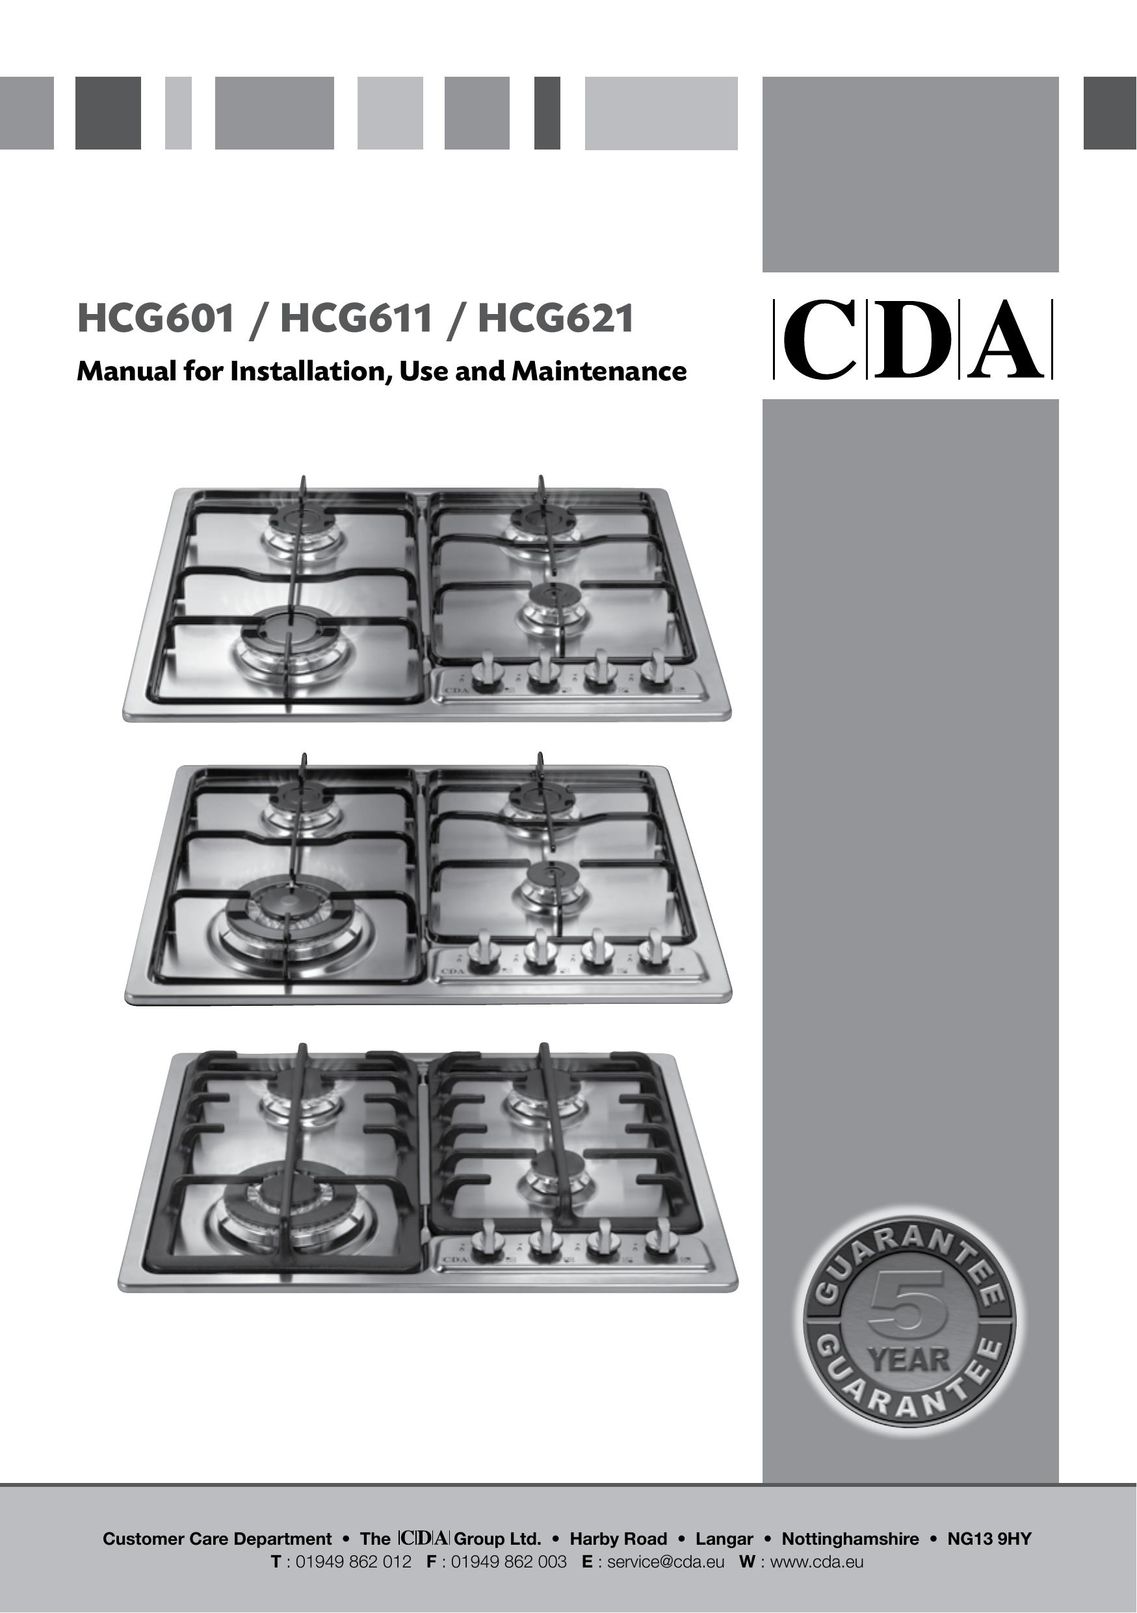 CDA HCG621 Cooktop User Manual